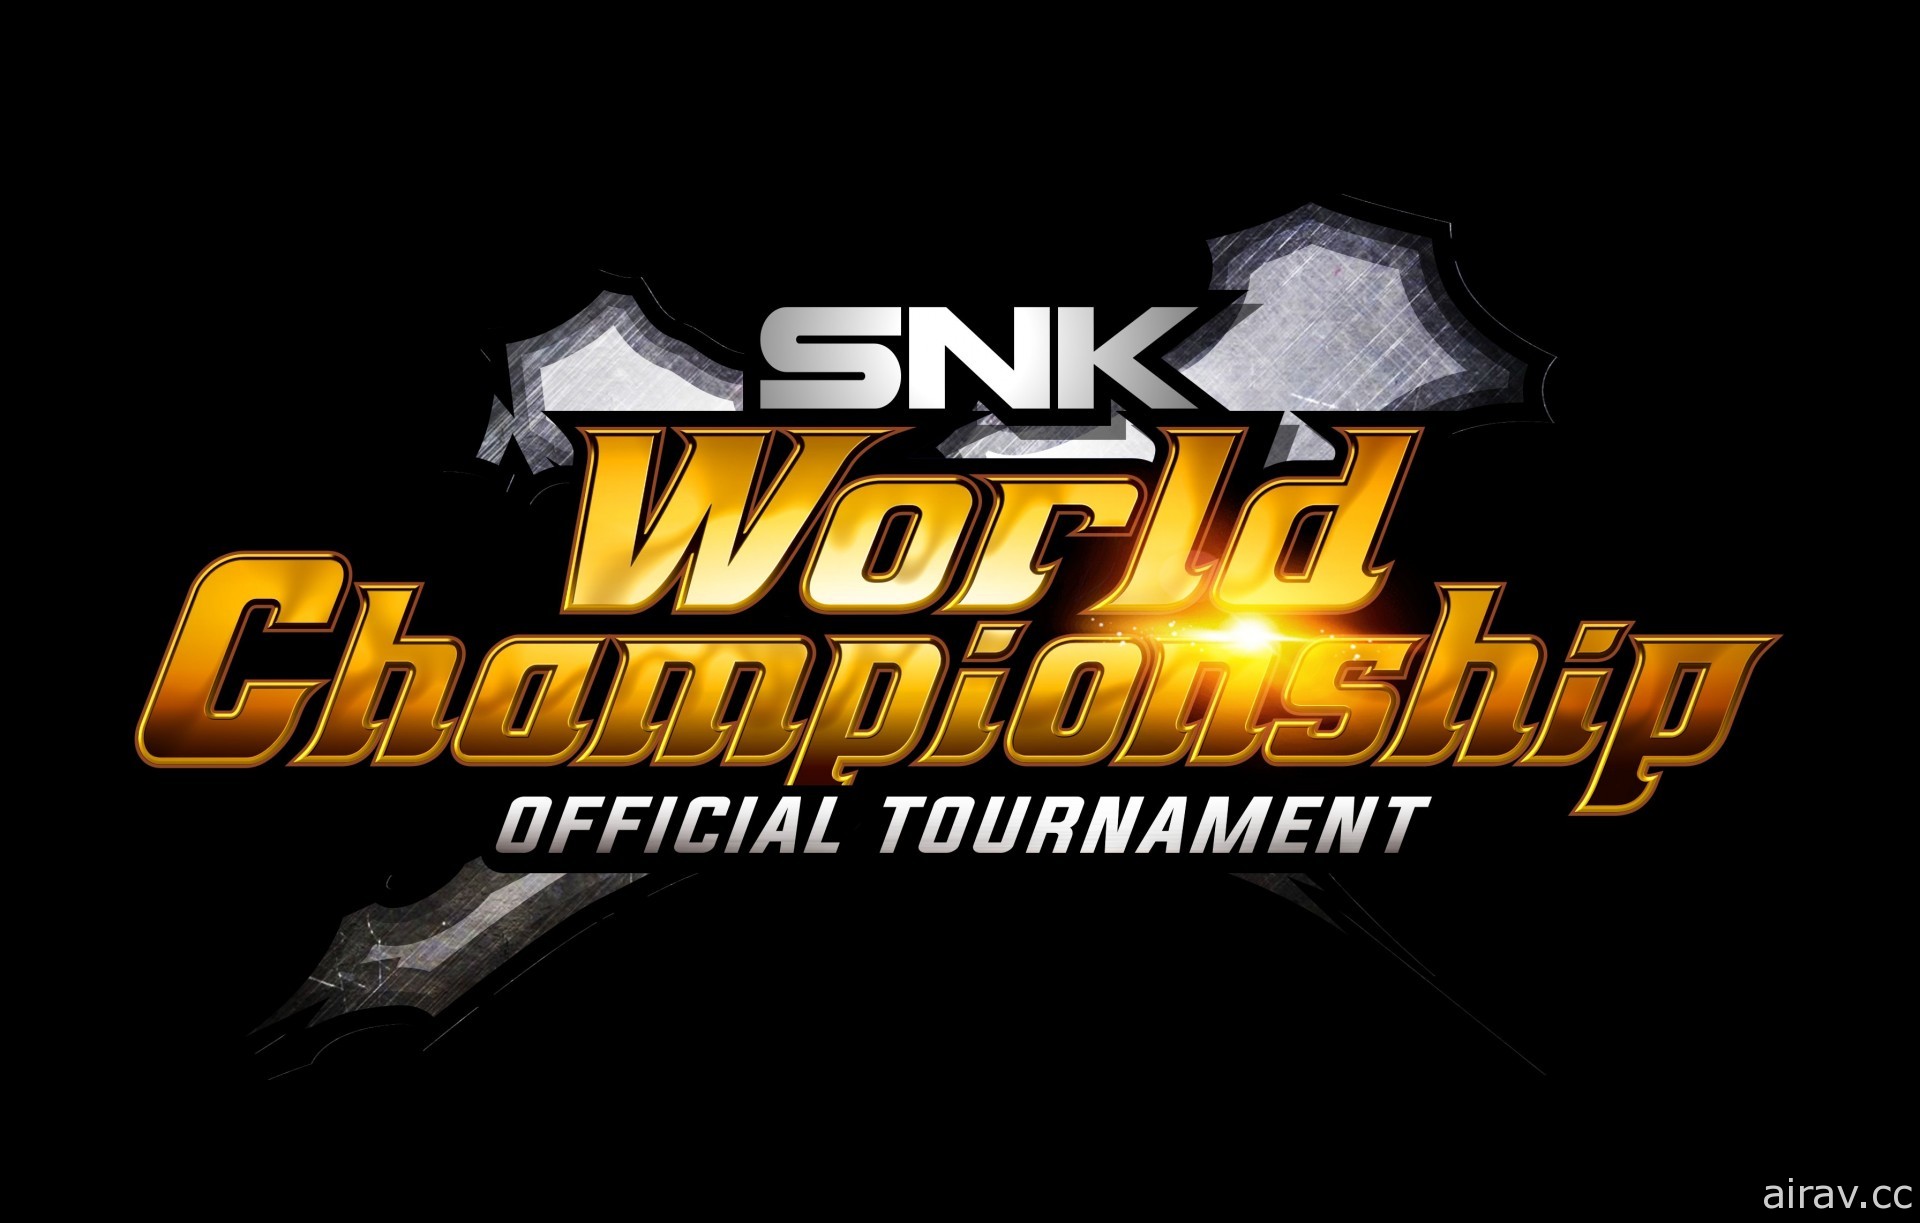 「SNK World Championship GRAND FINAL」受疫情影響 決定終止舉辦